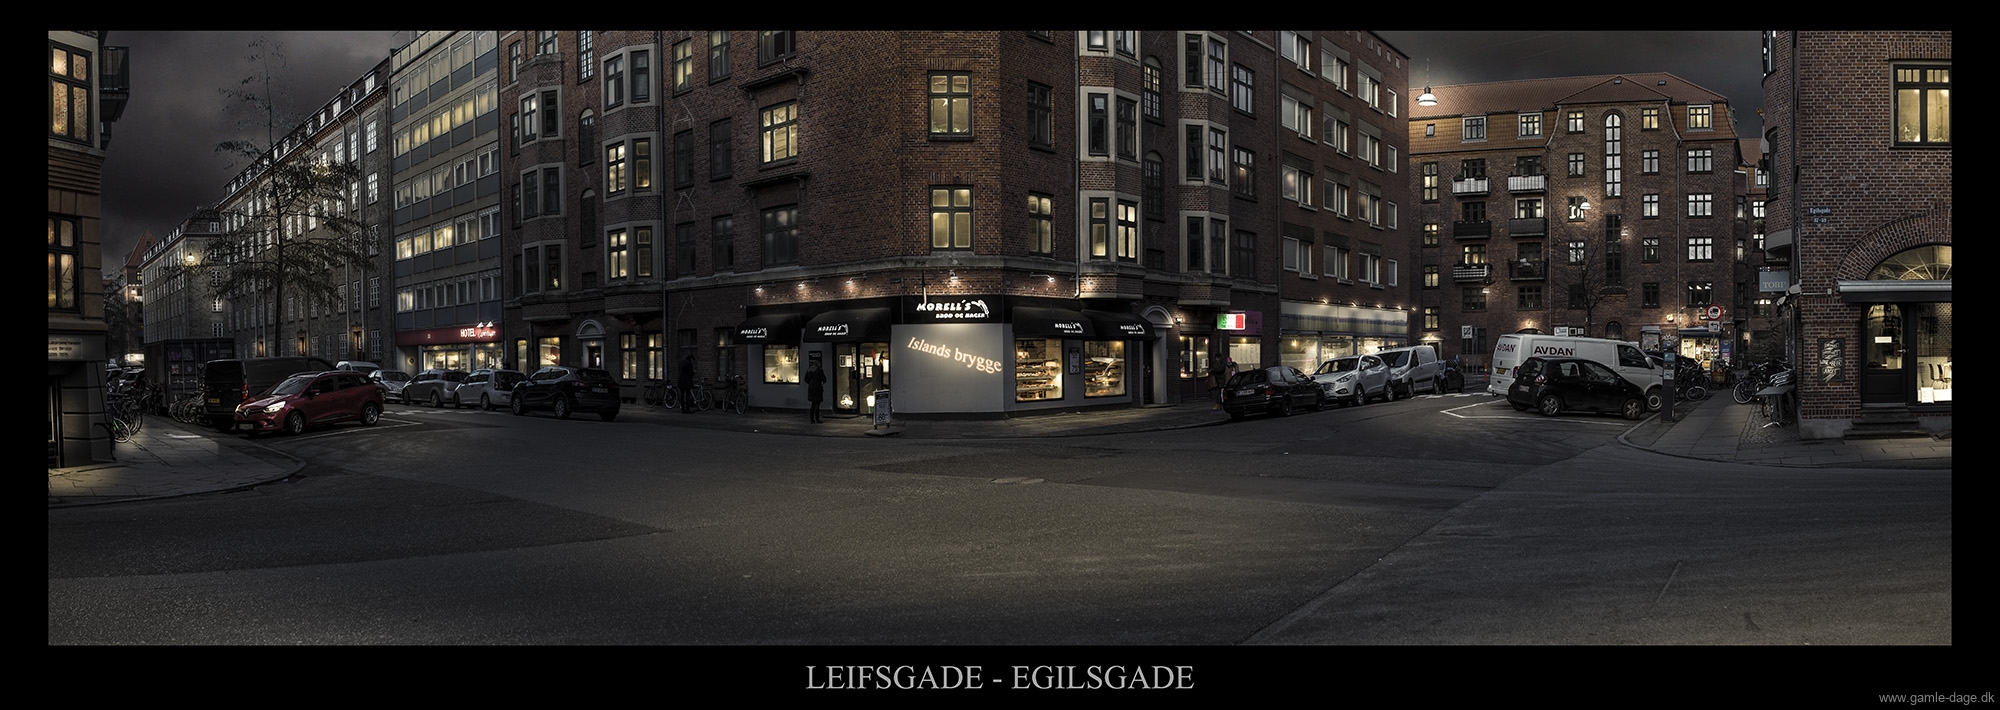 Leifsgade-Egilsgade